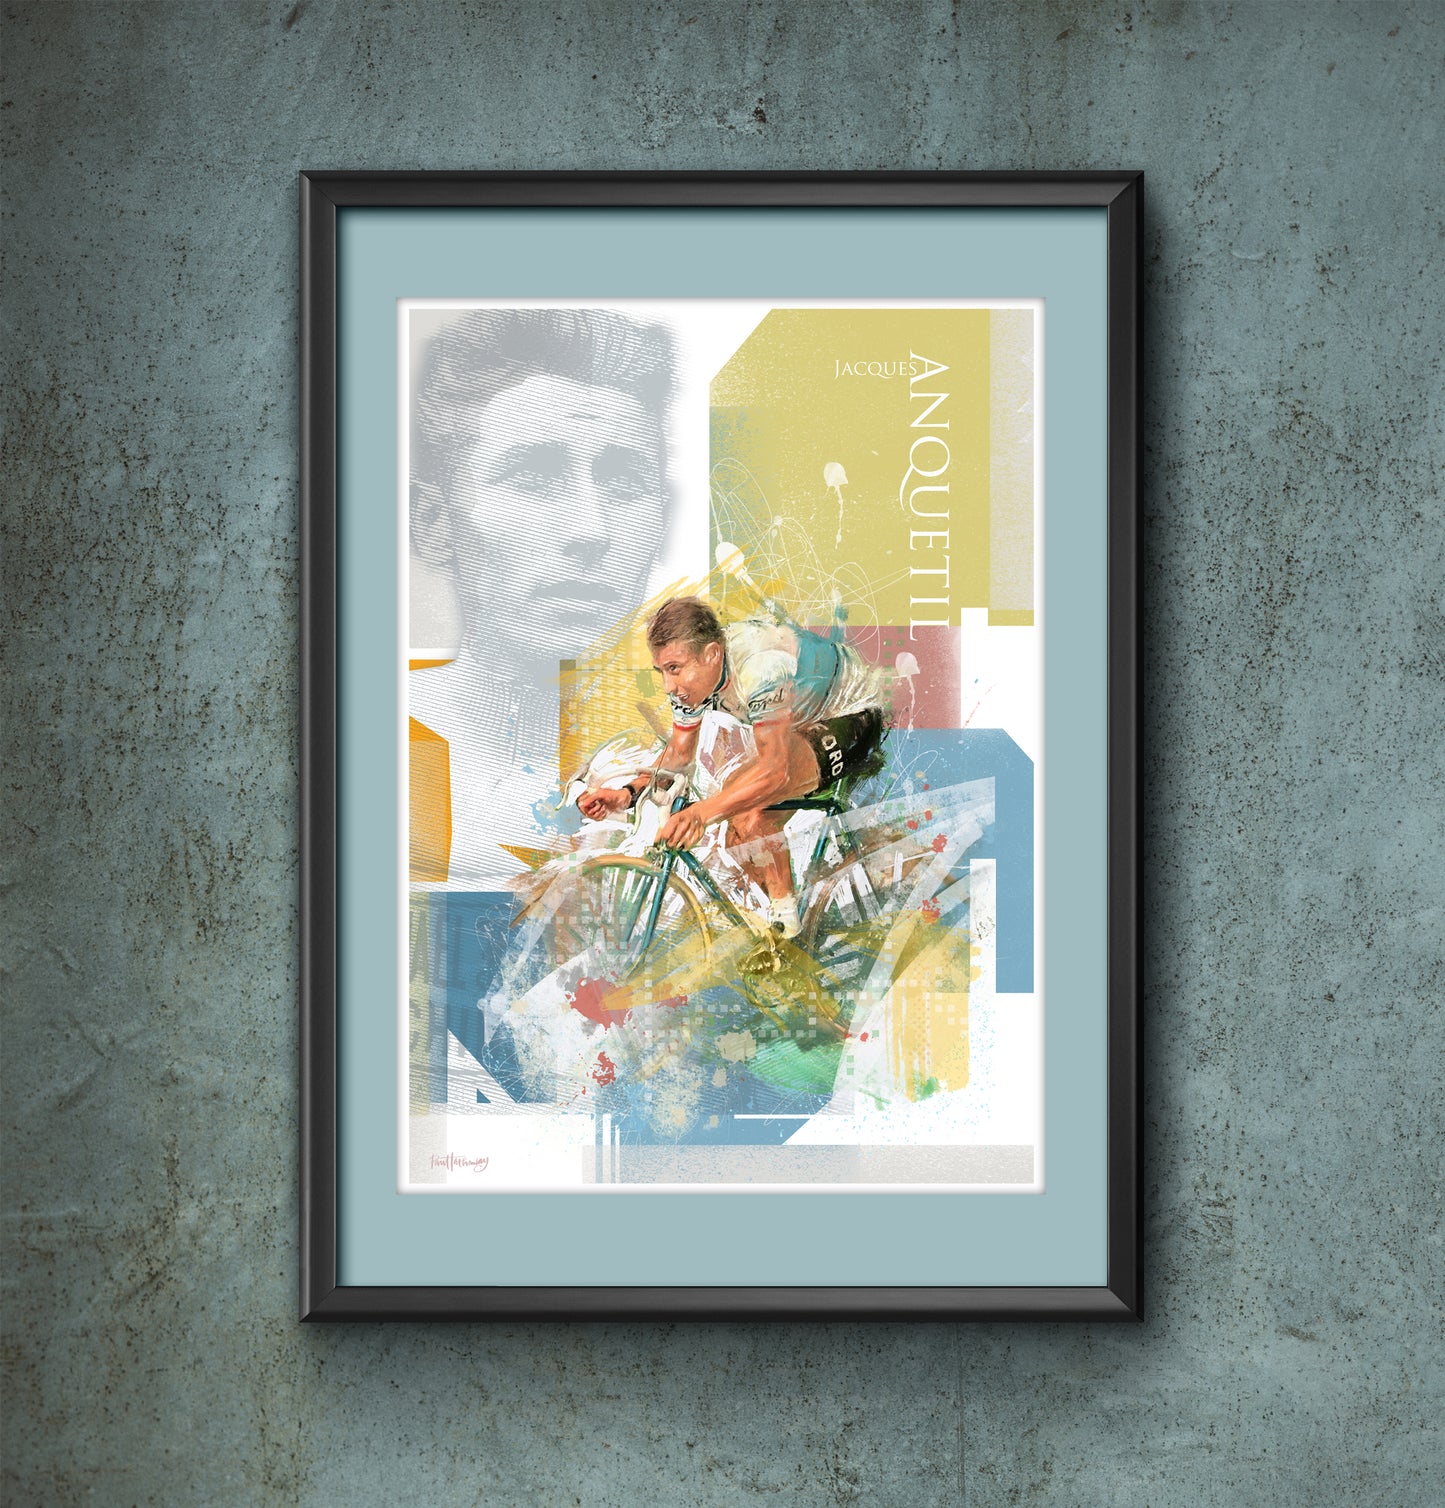 Jacques Anquetil - Cycling Art Print - Option 2